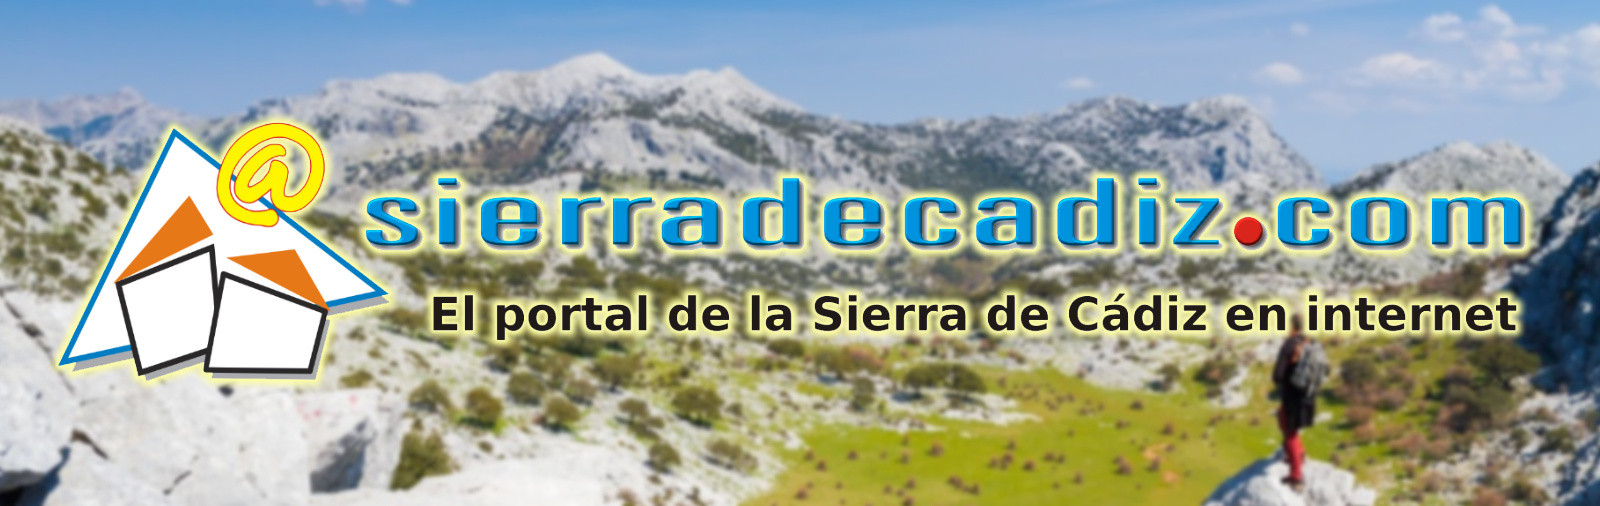 (c) Sierradecadiz.com